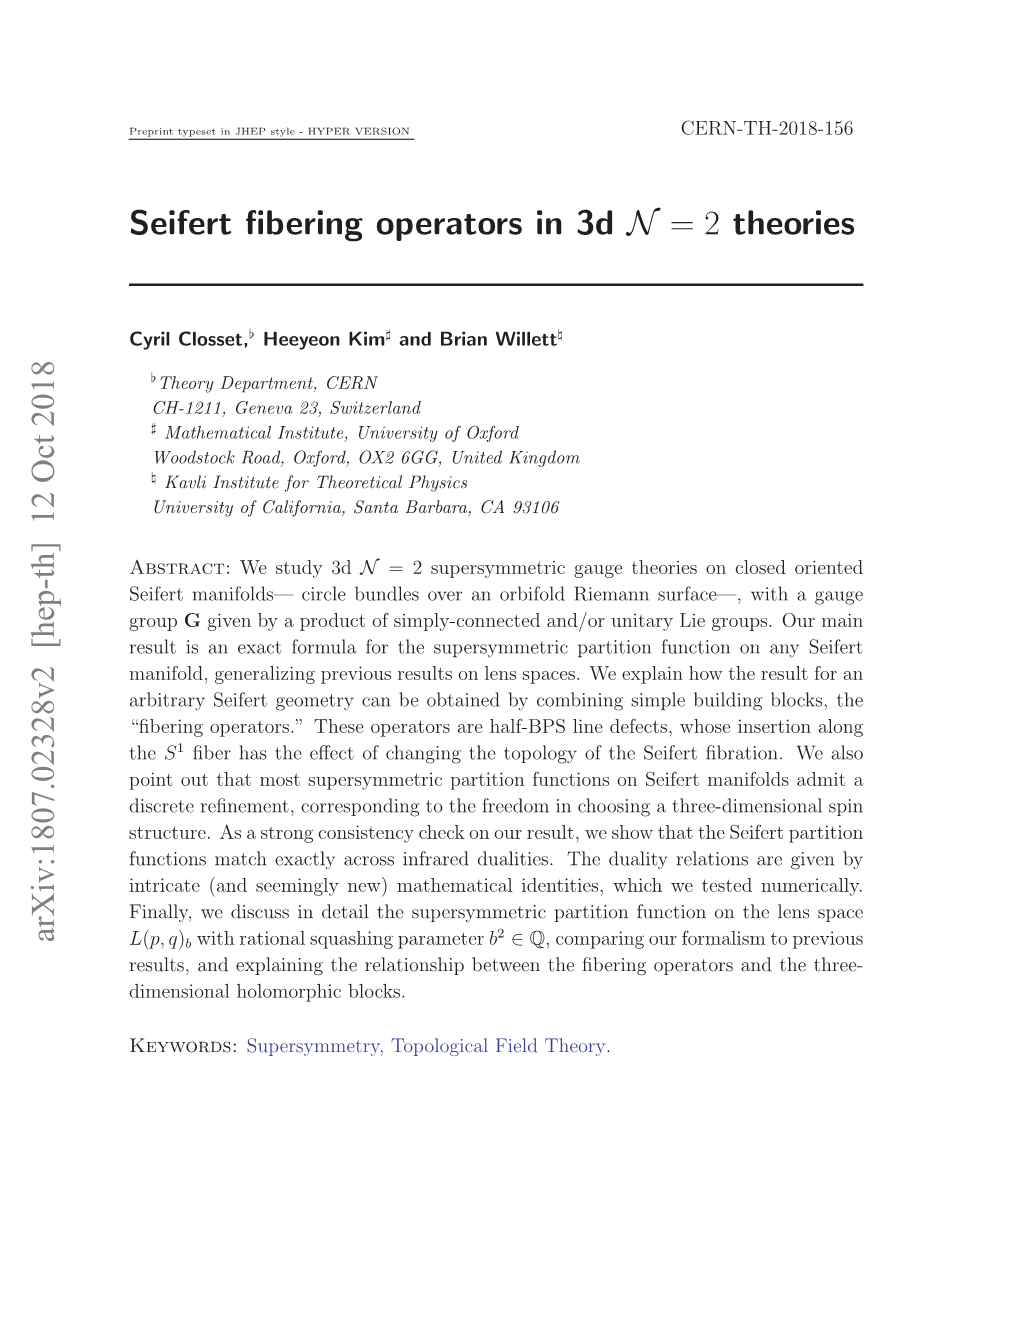 Seifert Fibering Operators in 3D N = 2 Theories Arxiv:1807.02328V2 [Hep